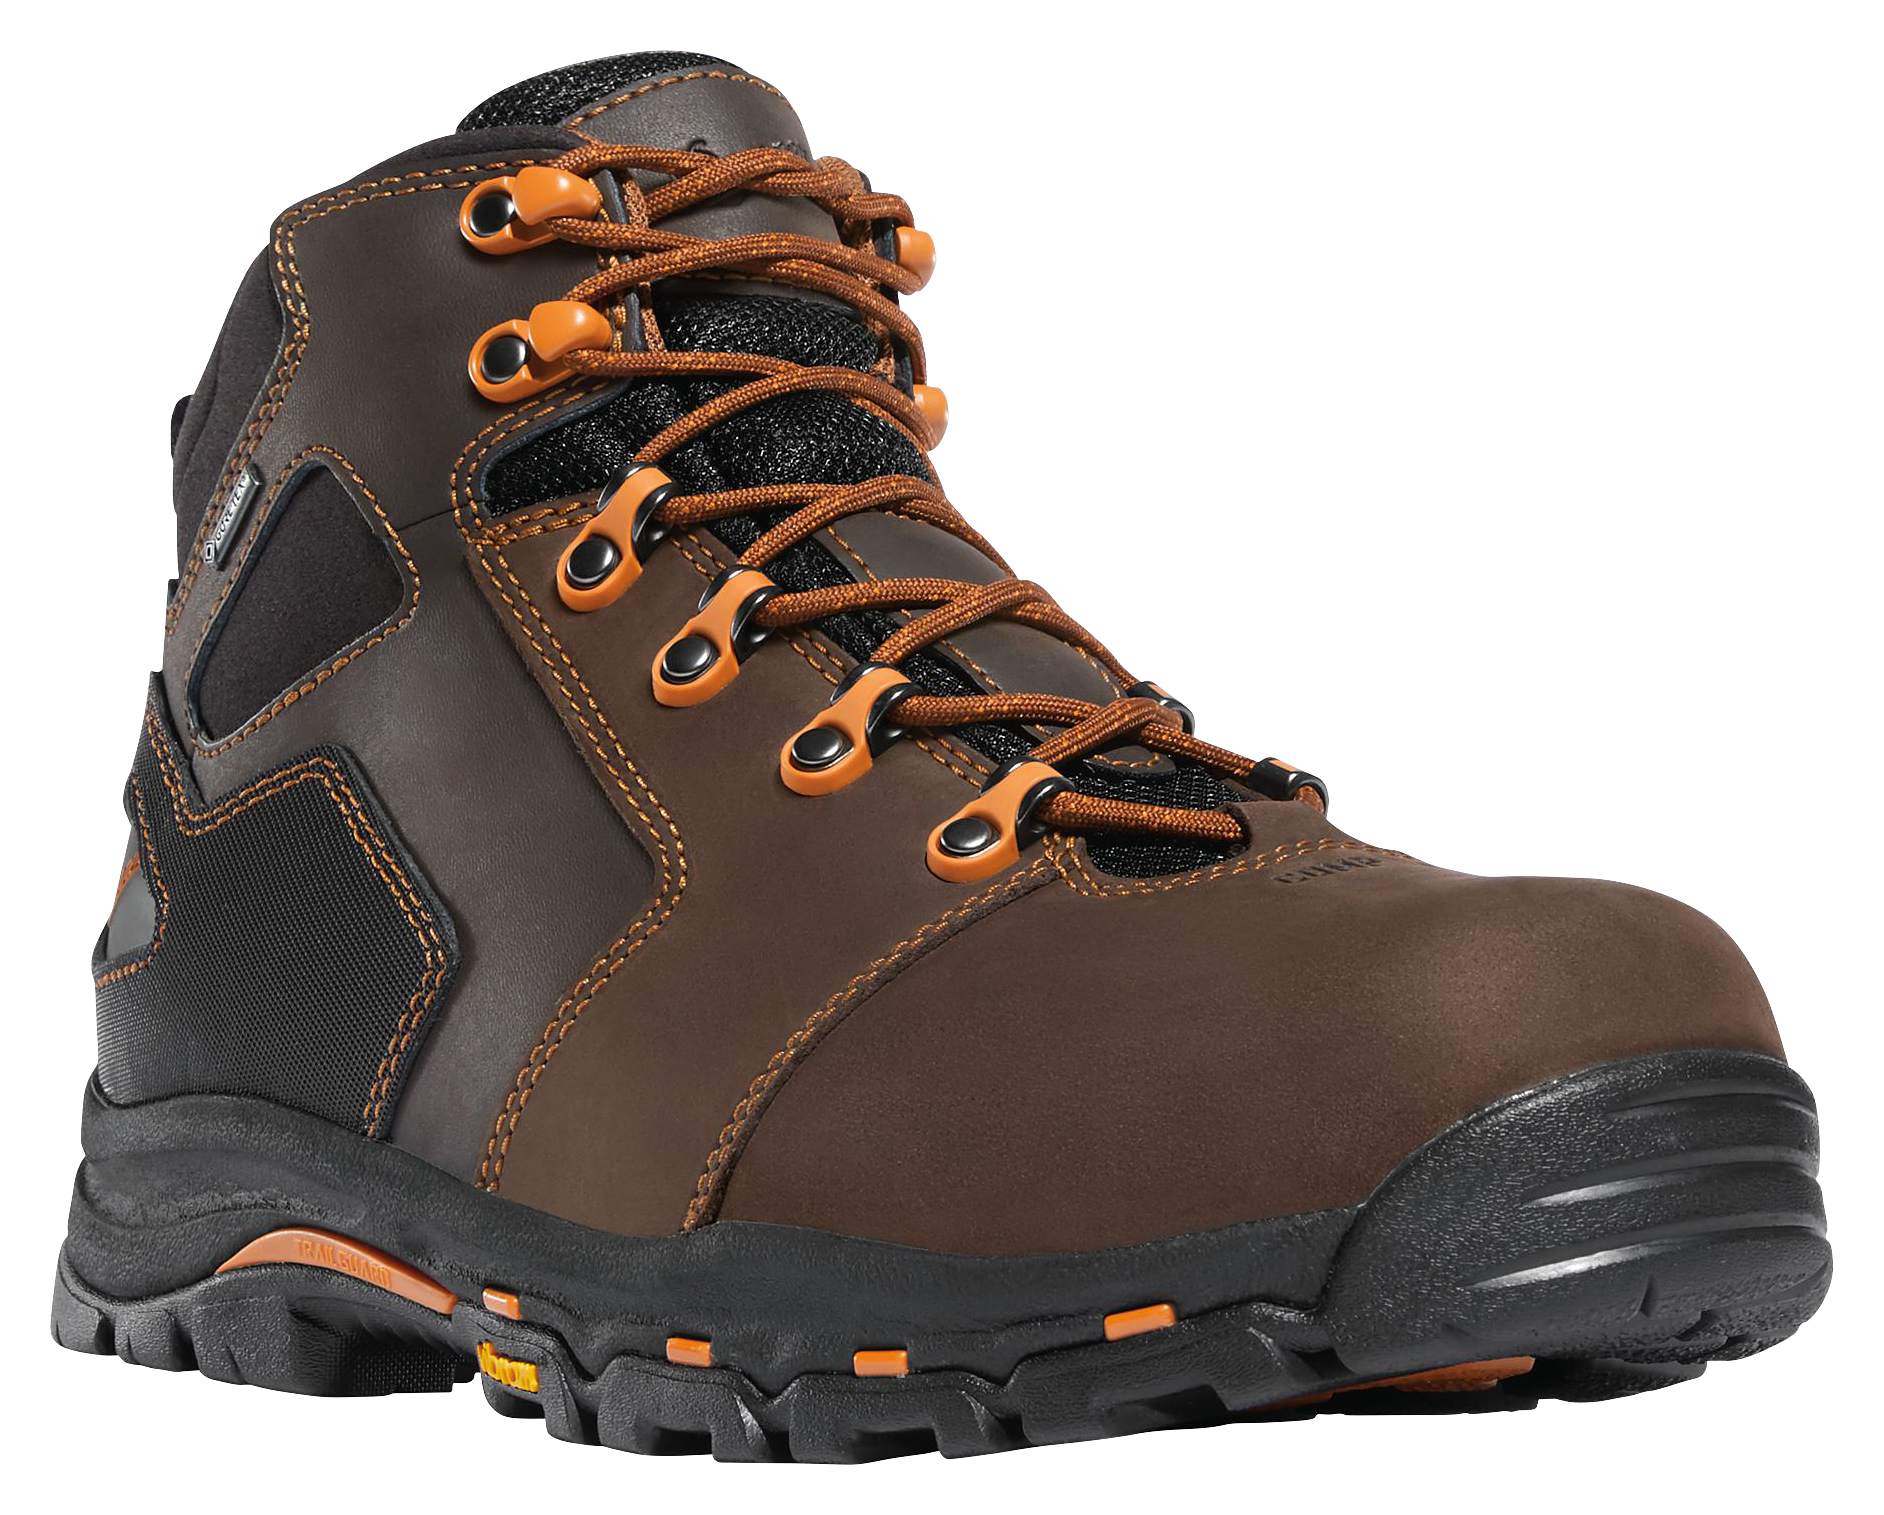 Danner Vicious 4.5'' GORE-TEX EH Work Boots for Men - Brown/Orange - 9.5M